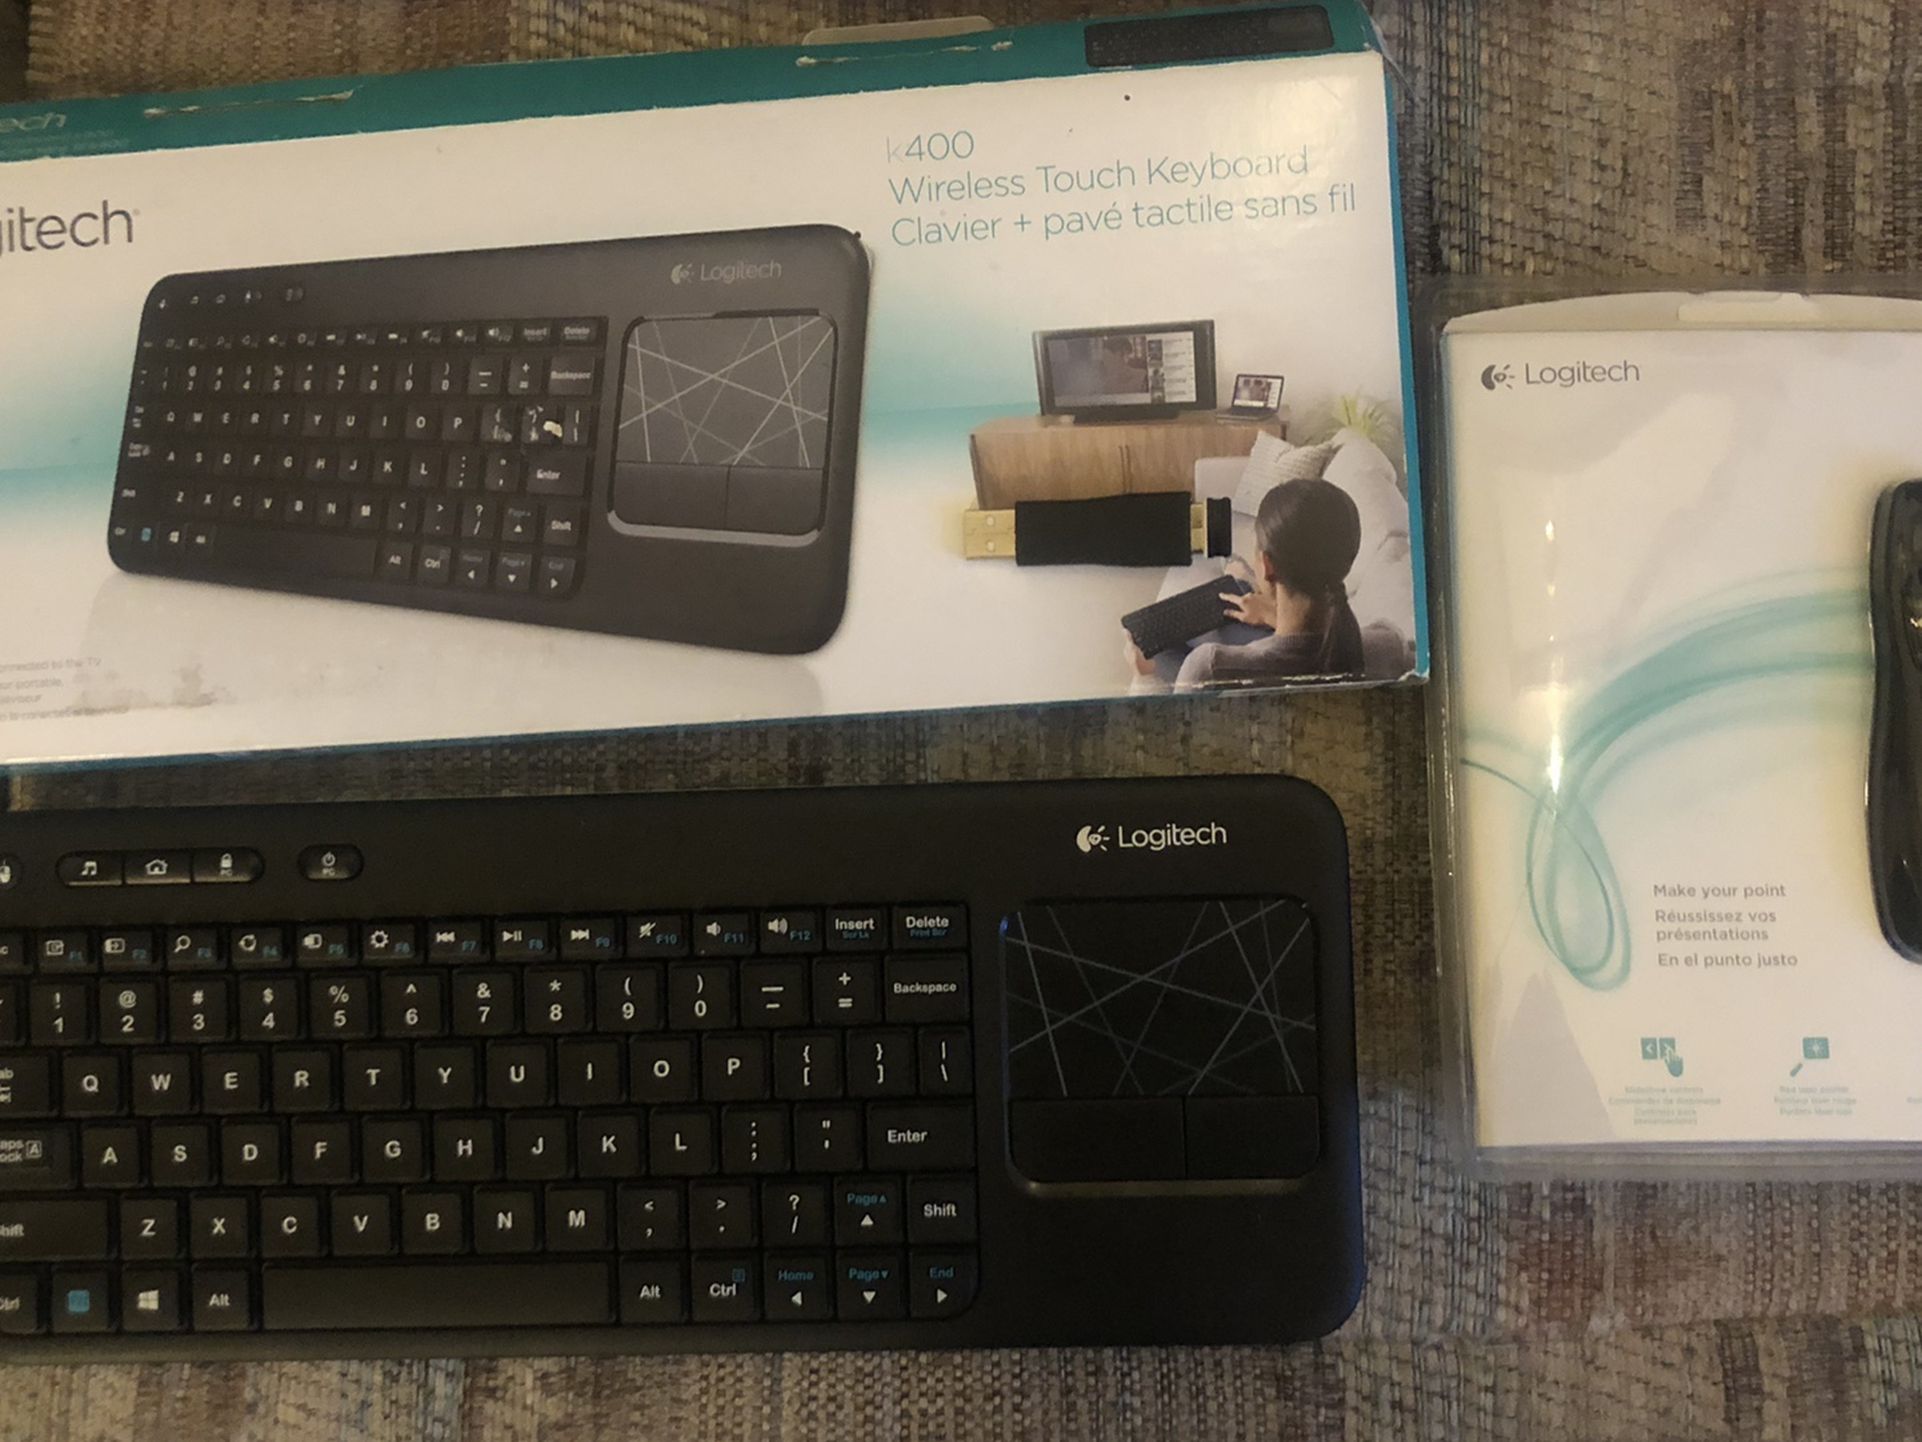 Logitech k400 r400 wireless keyboard mouse presenter $30 firm for both